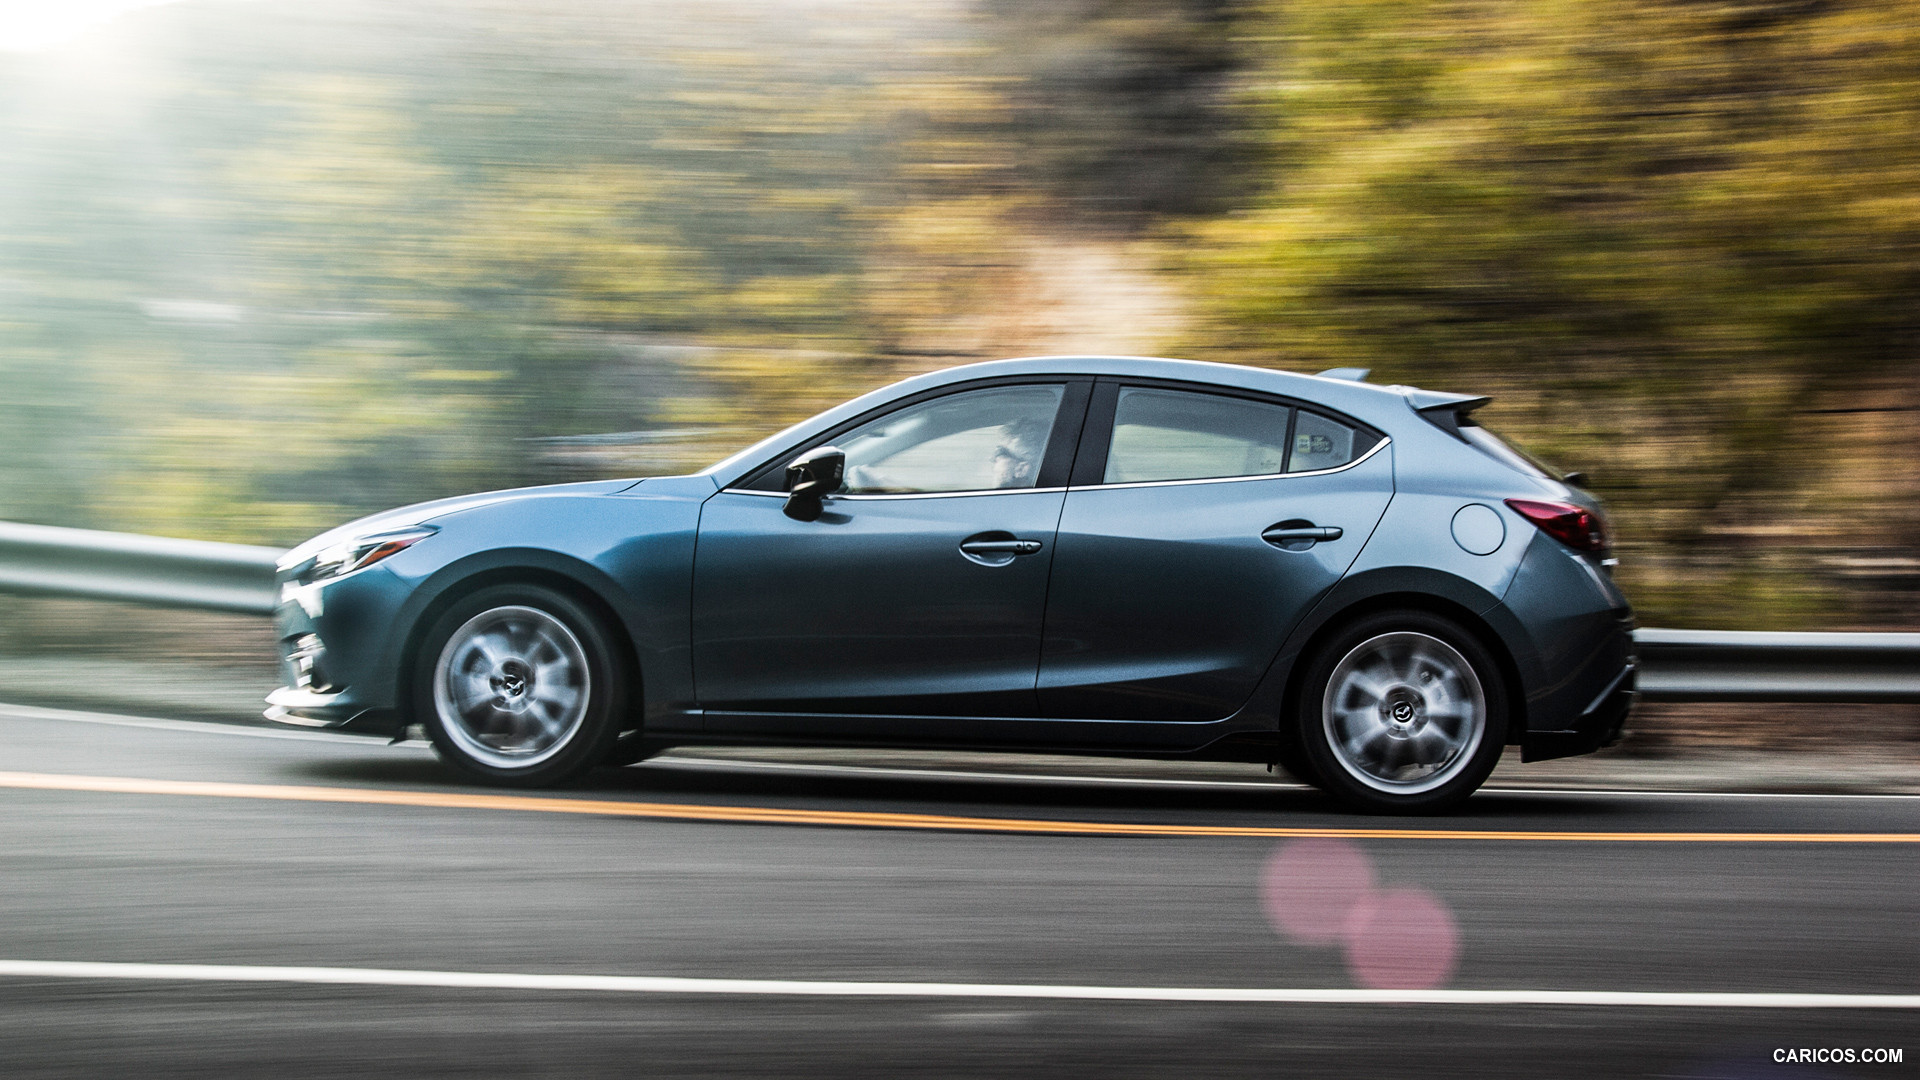 2015 Mazda 3 5D s Touring 6MT (Blue Reflex)  - Side, #8 of 27